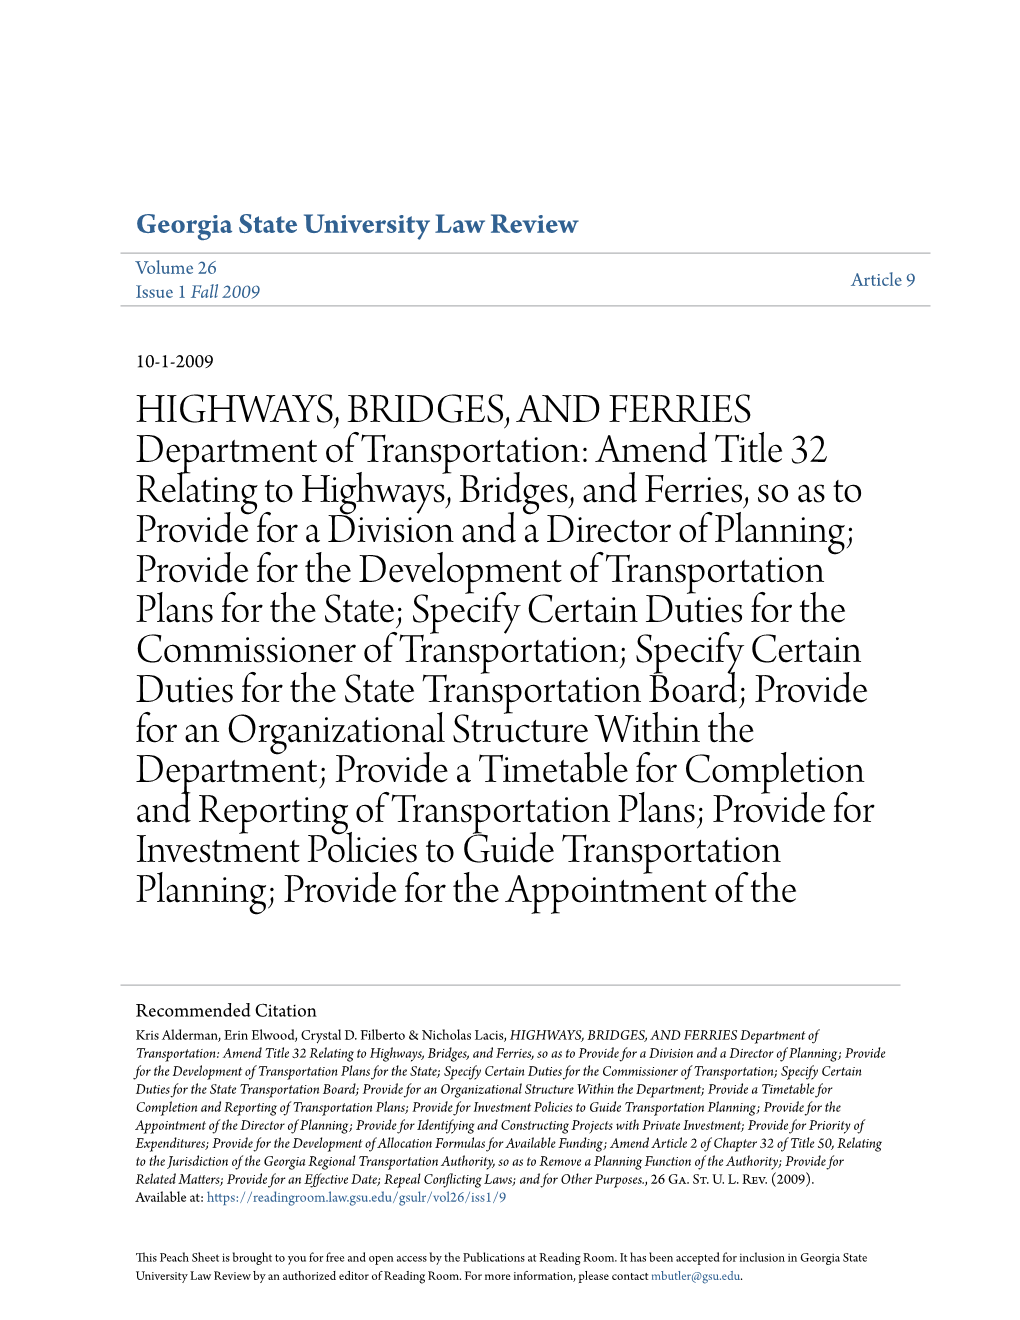 Highways, Bridges, and Ferries